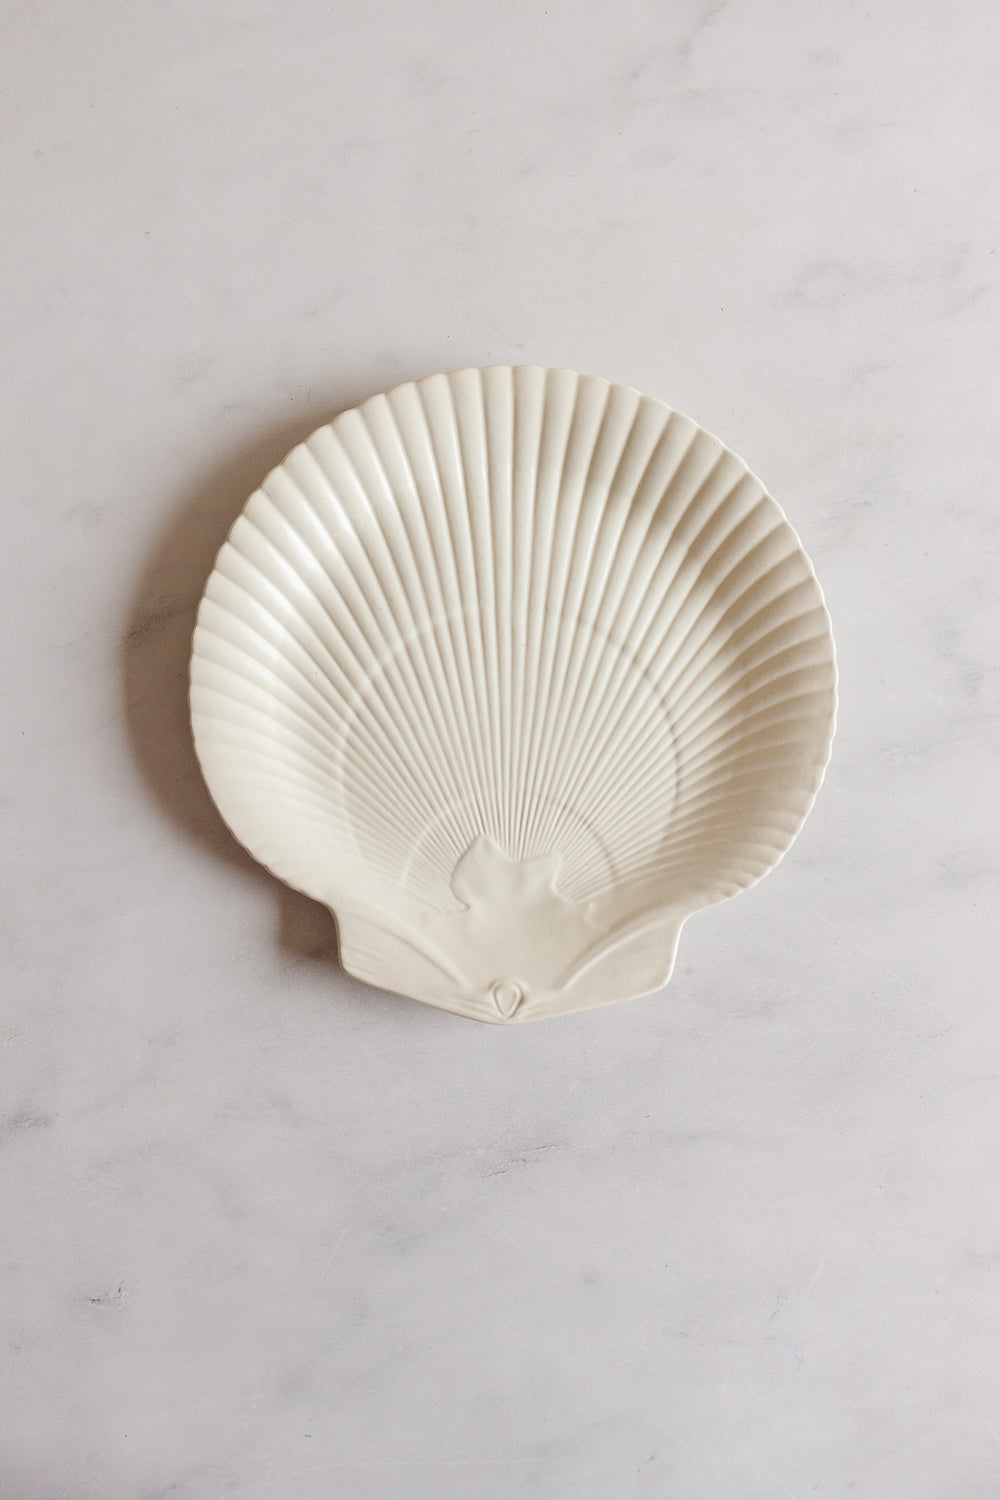 vintage wedgwood shell plate